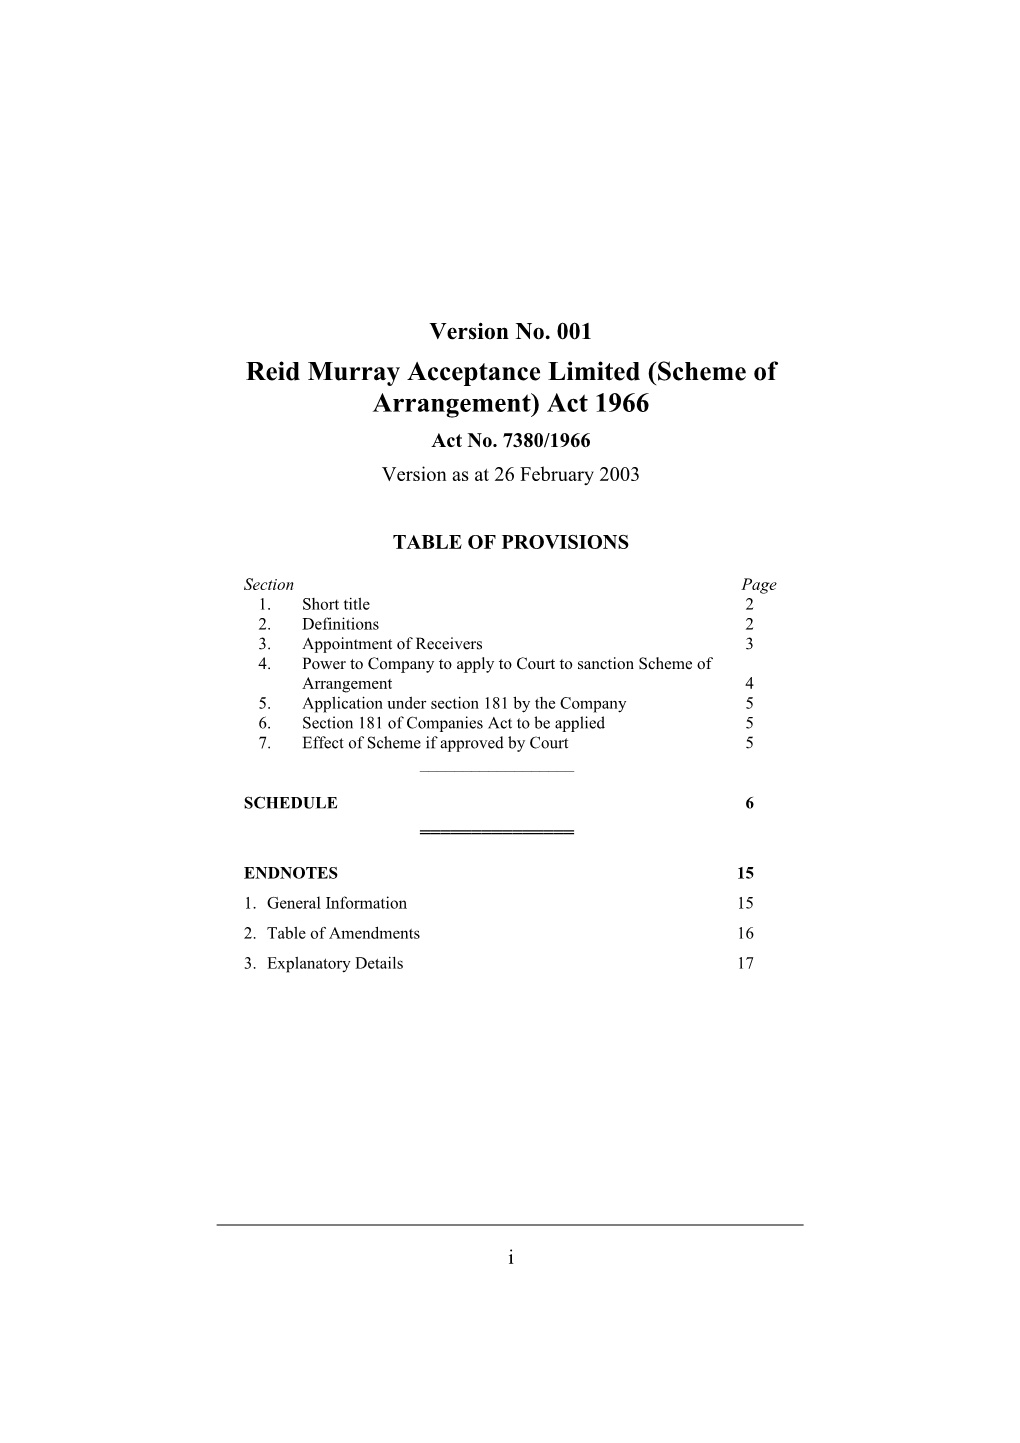 Reid Murray Acceptance Limited (Scheme of Arrangement) Act 1966